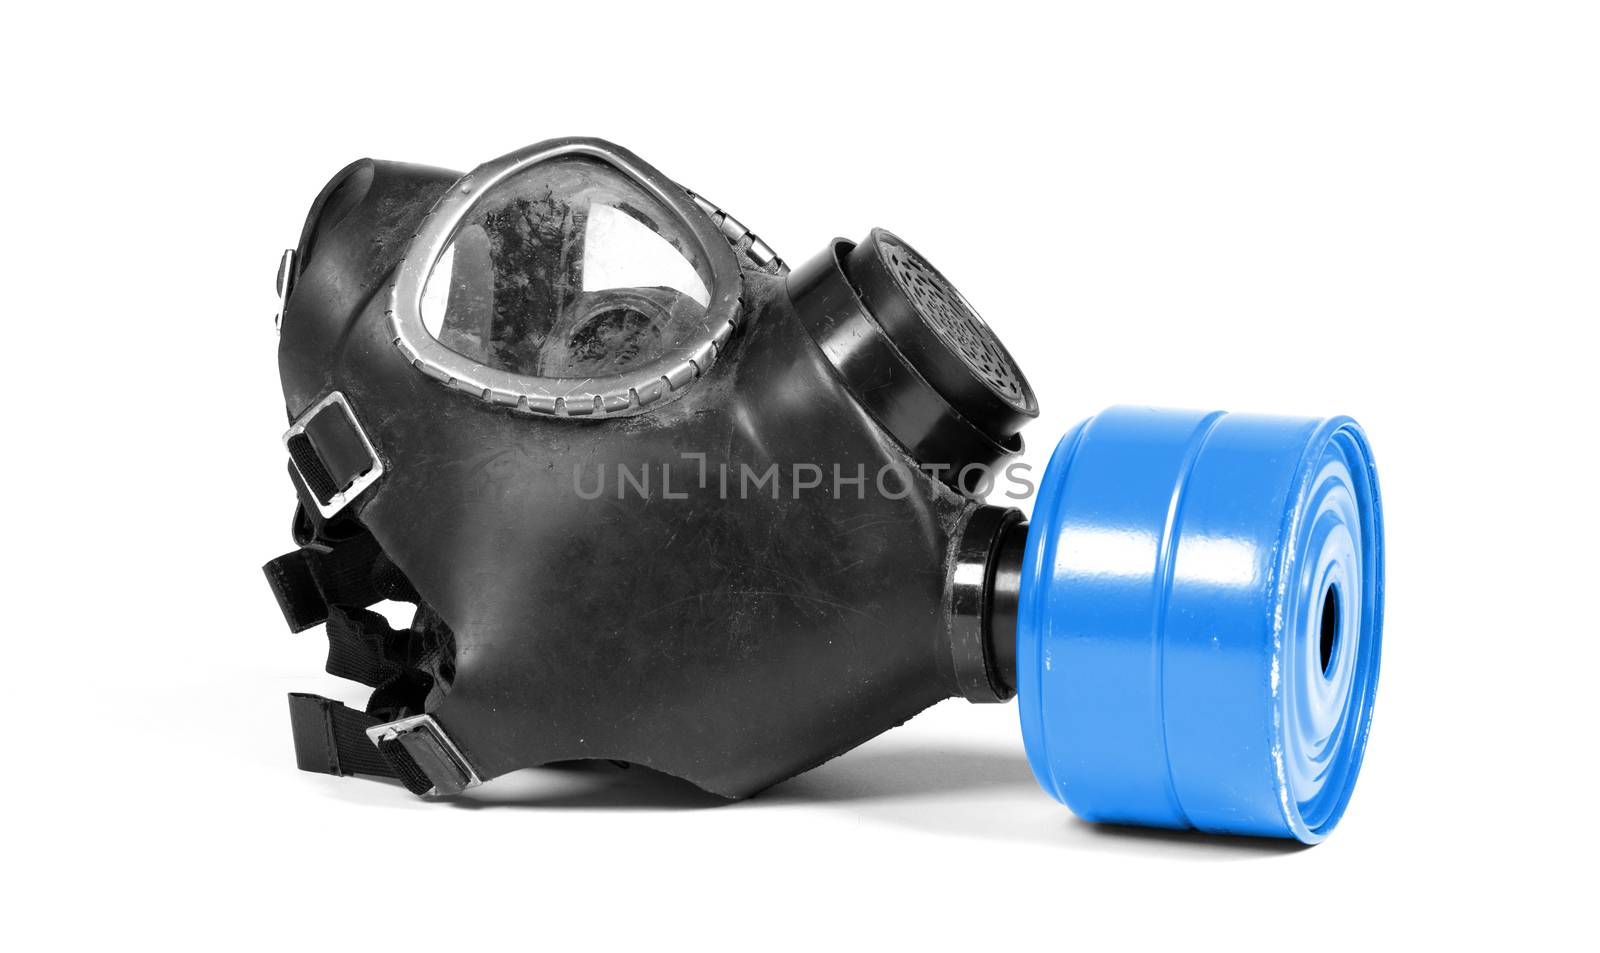 Vintage gasmask isolated on a white background - Blue filter